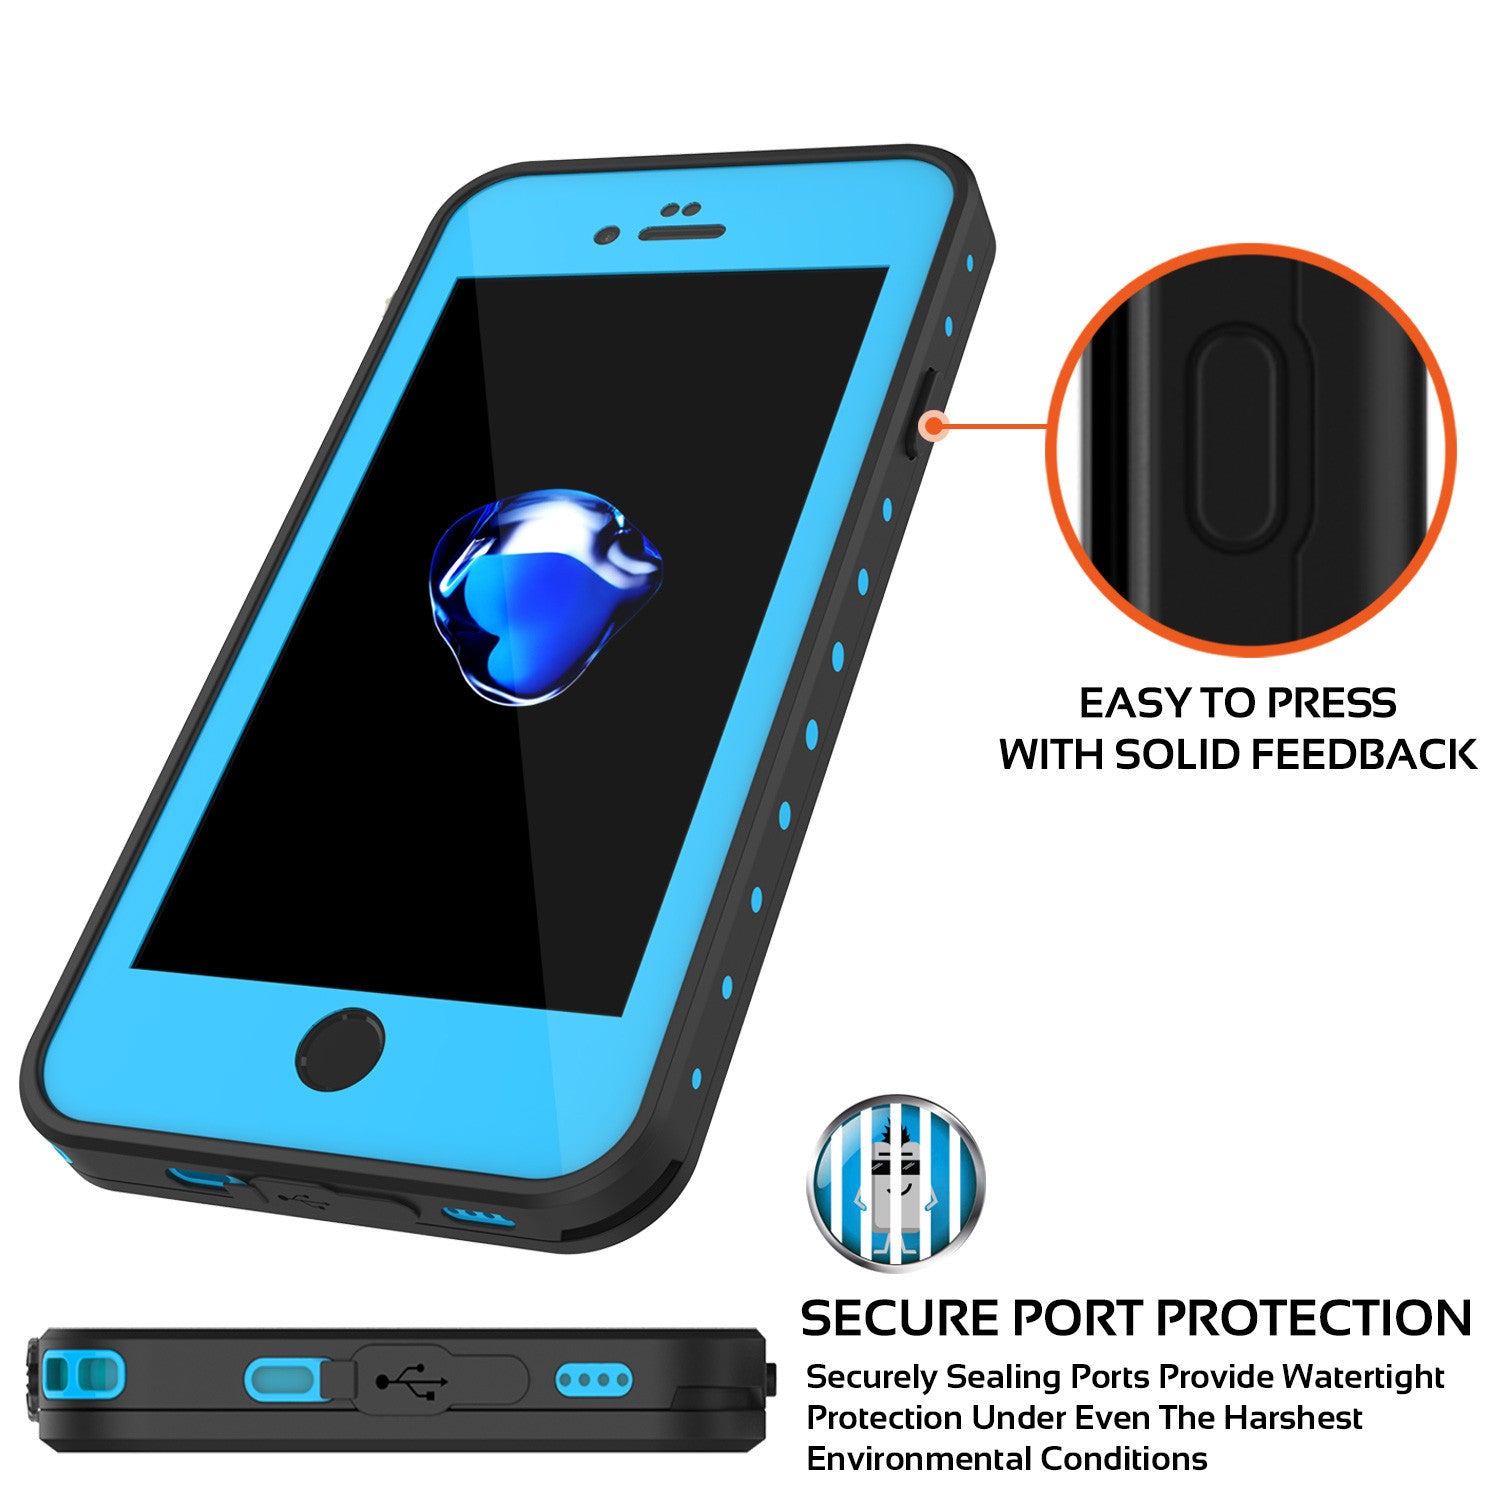 PUNKCASE - Studstar Series Snowproof Case for Apple IPhone 7 | Light Blue